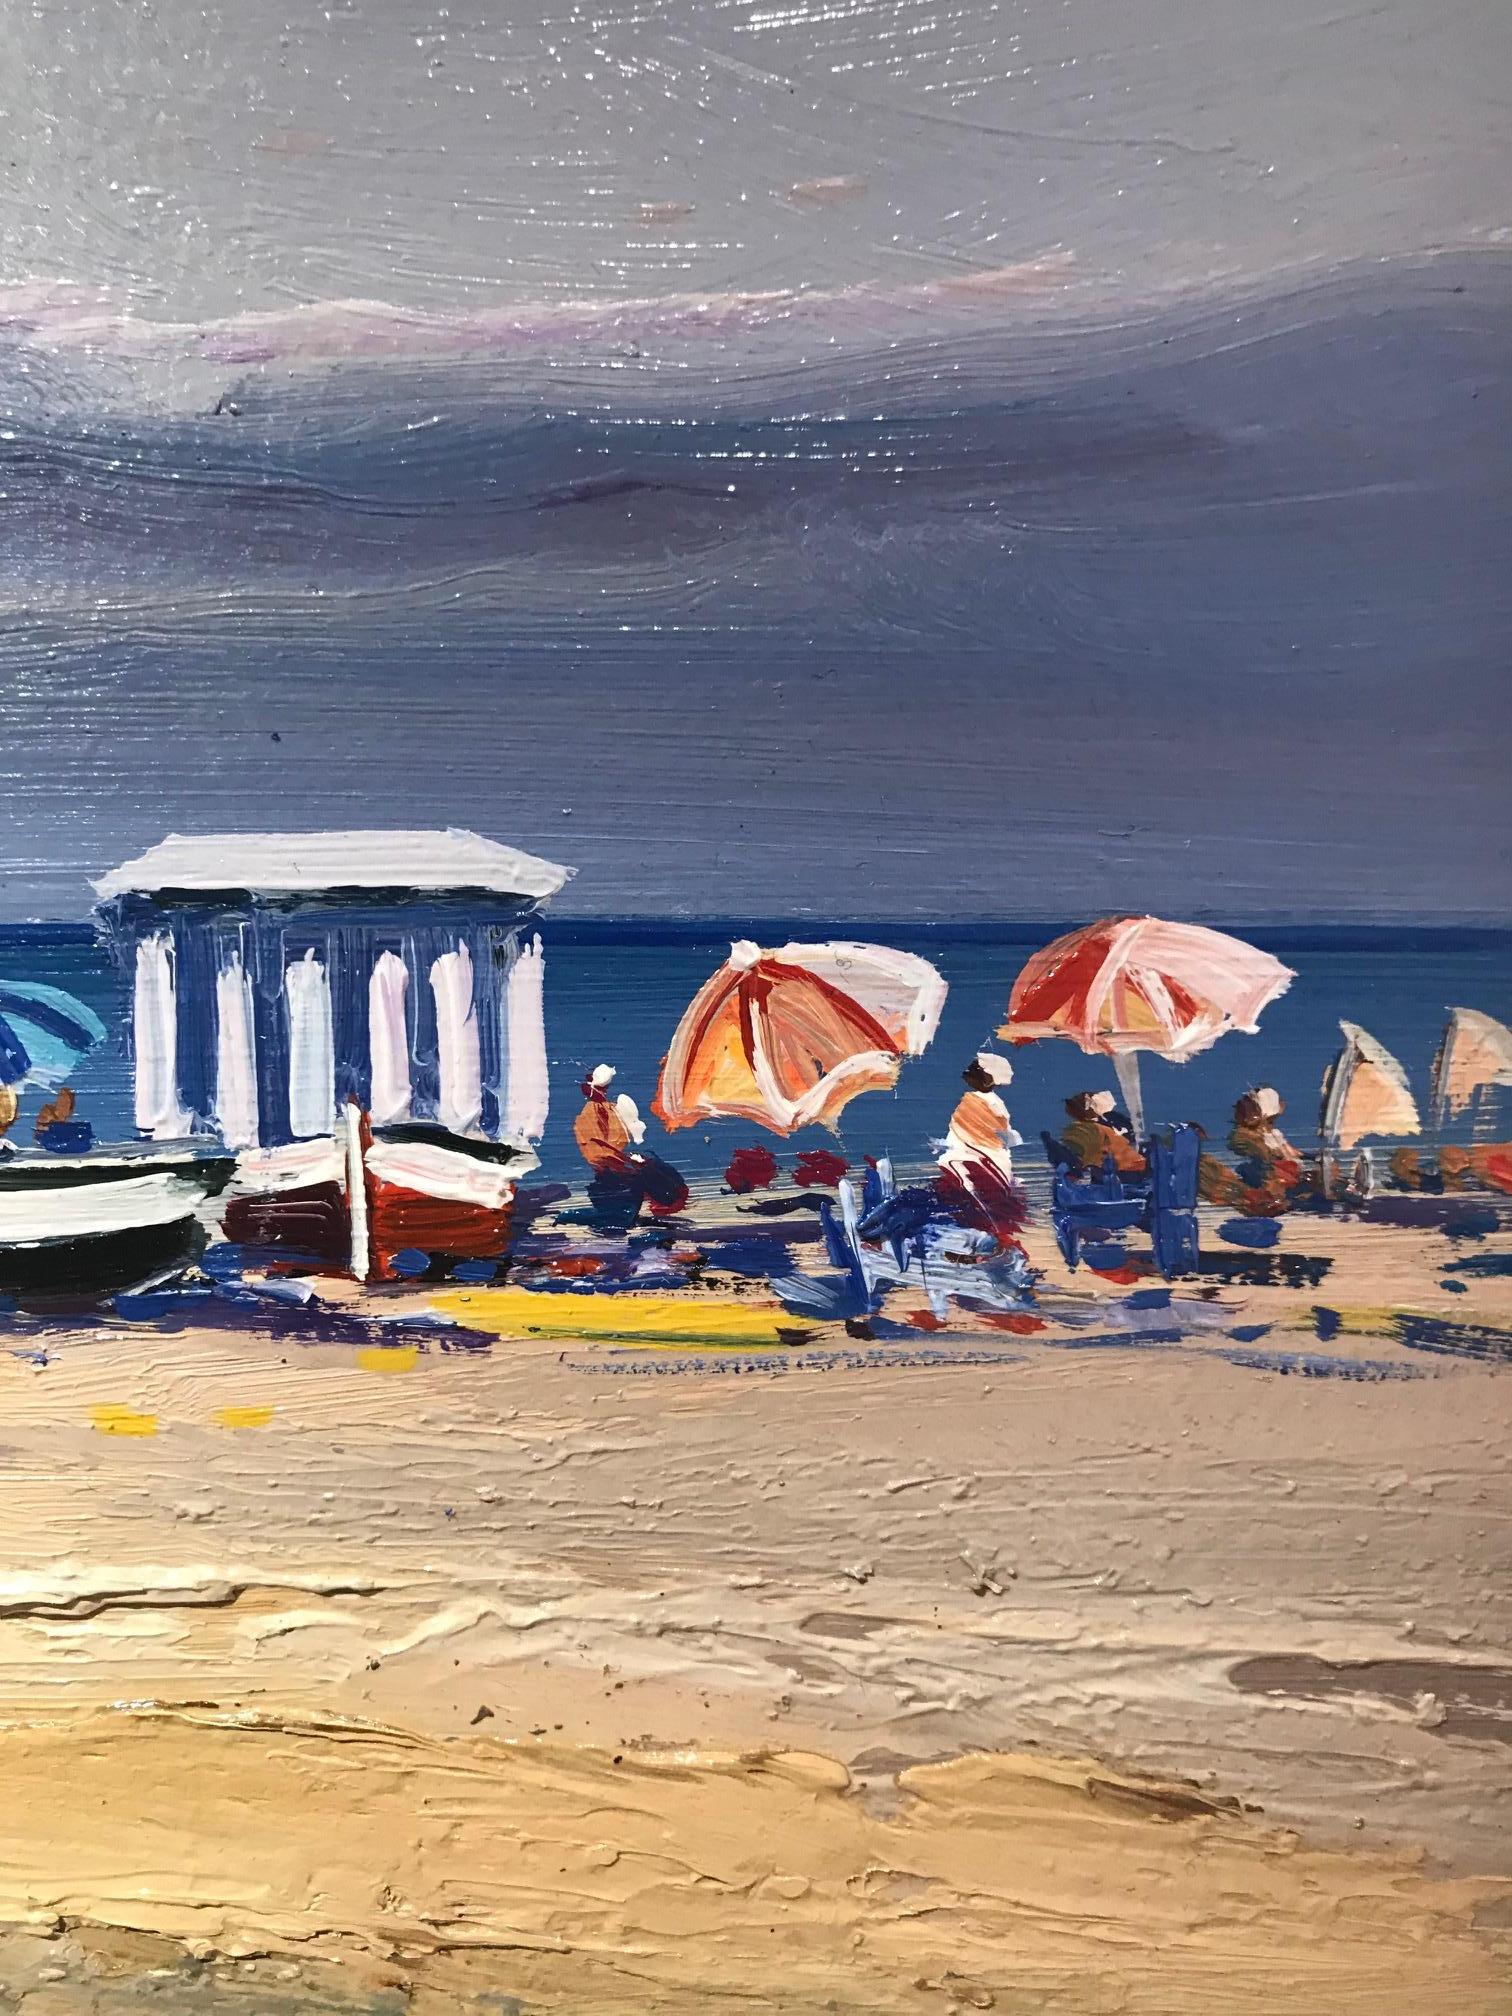 Contemporary Vivid Blue Seascape & Beach Scene 'Beach Day', blues, pinks, yellow - Gray Landscape Painting by E. Martinez